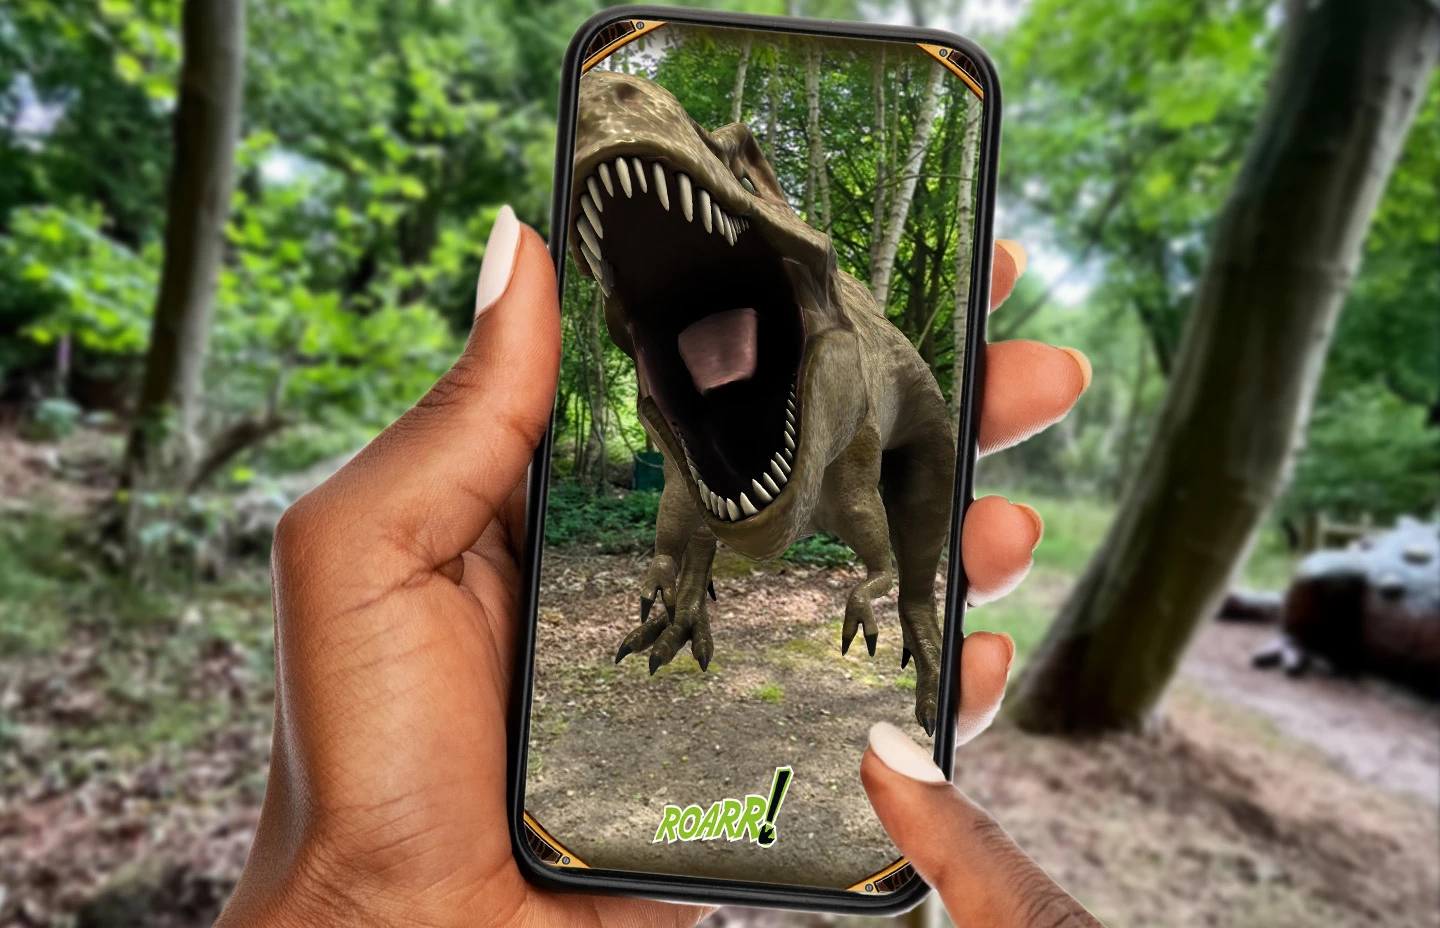 A phone showing an AR TRex roaring